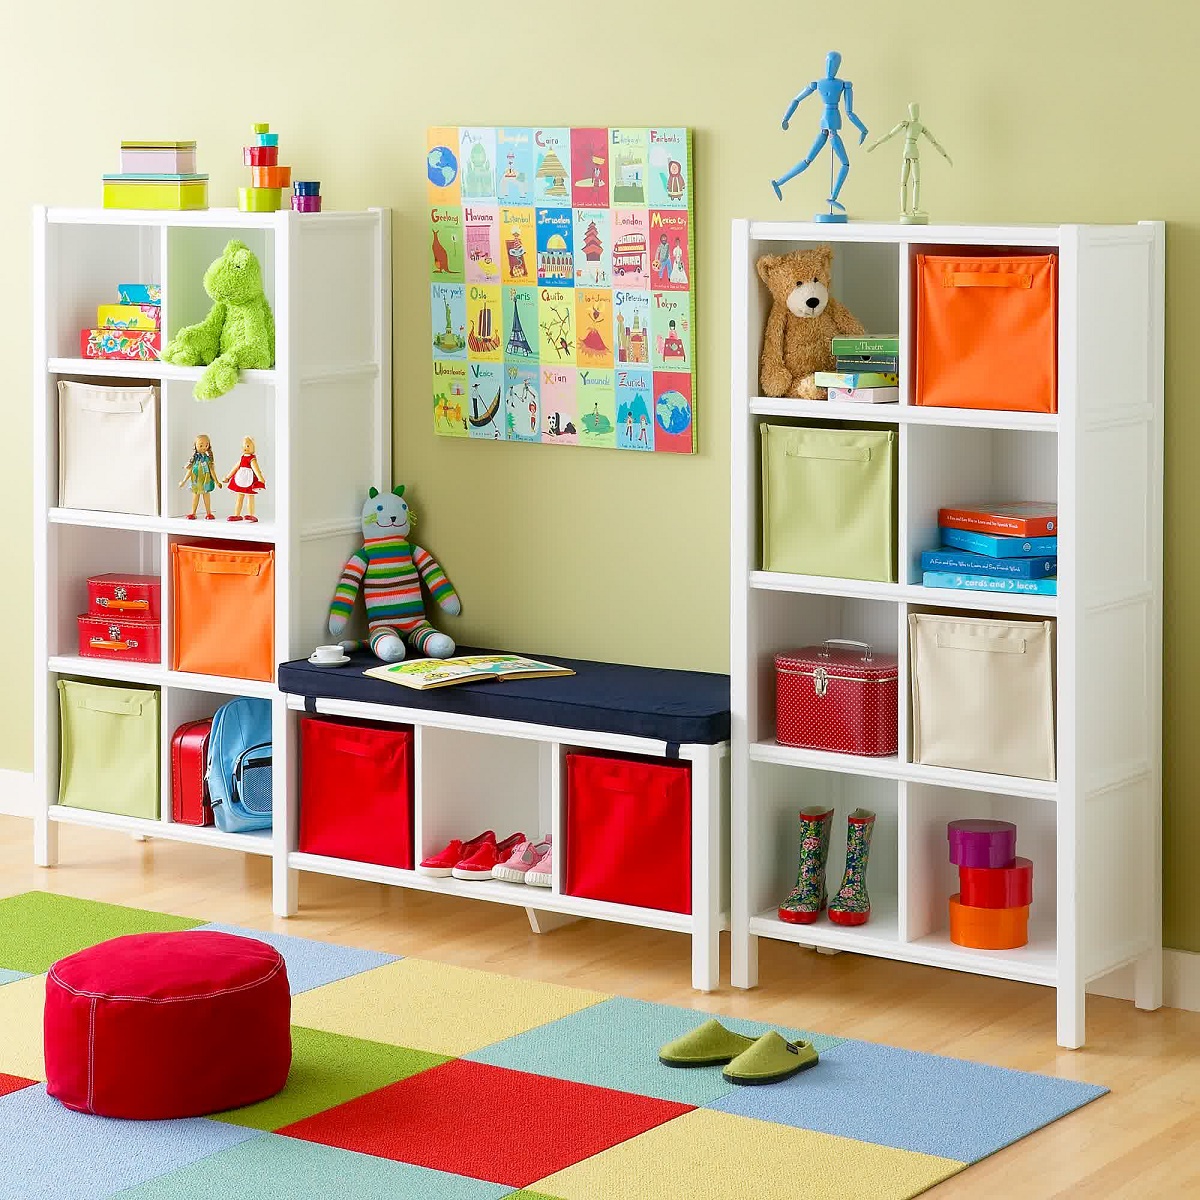 Furniture for kids playrooms